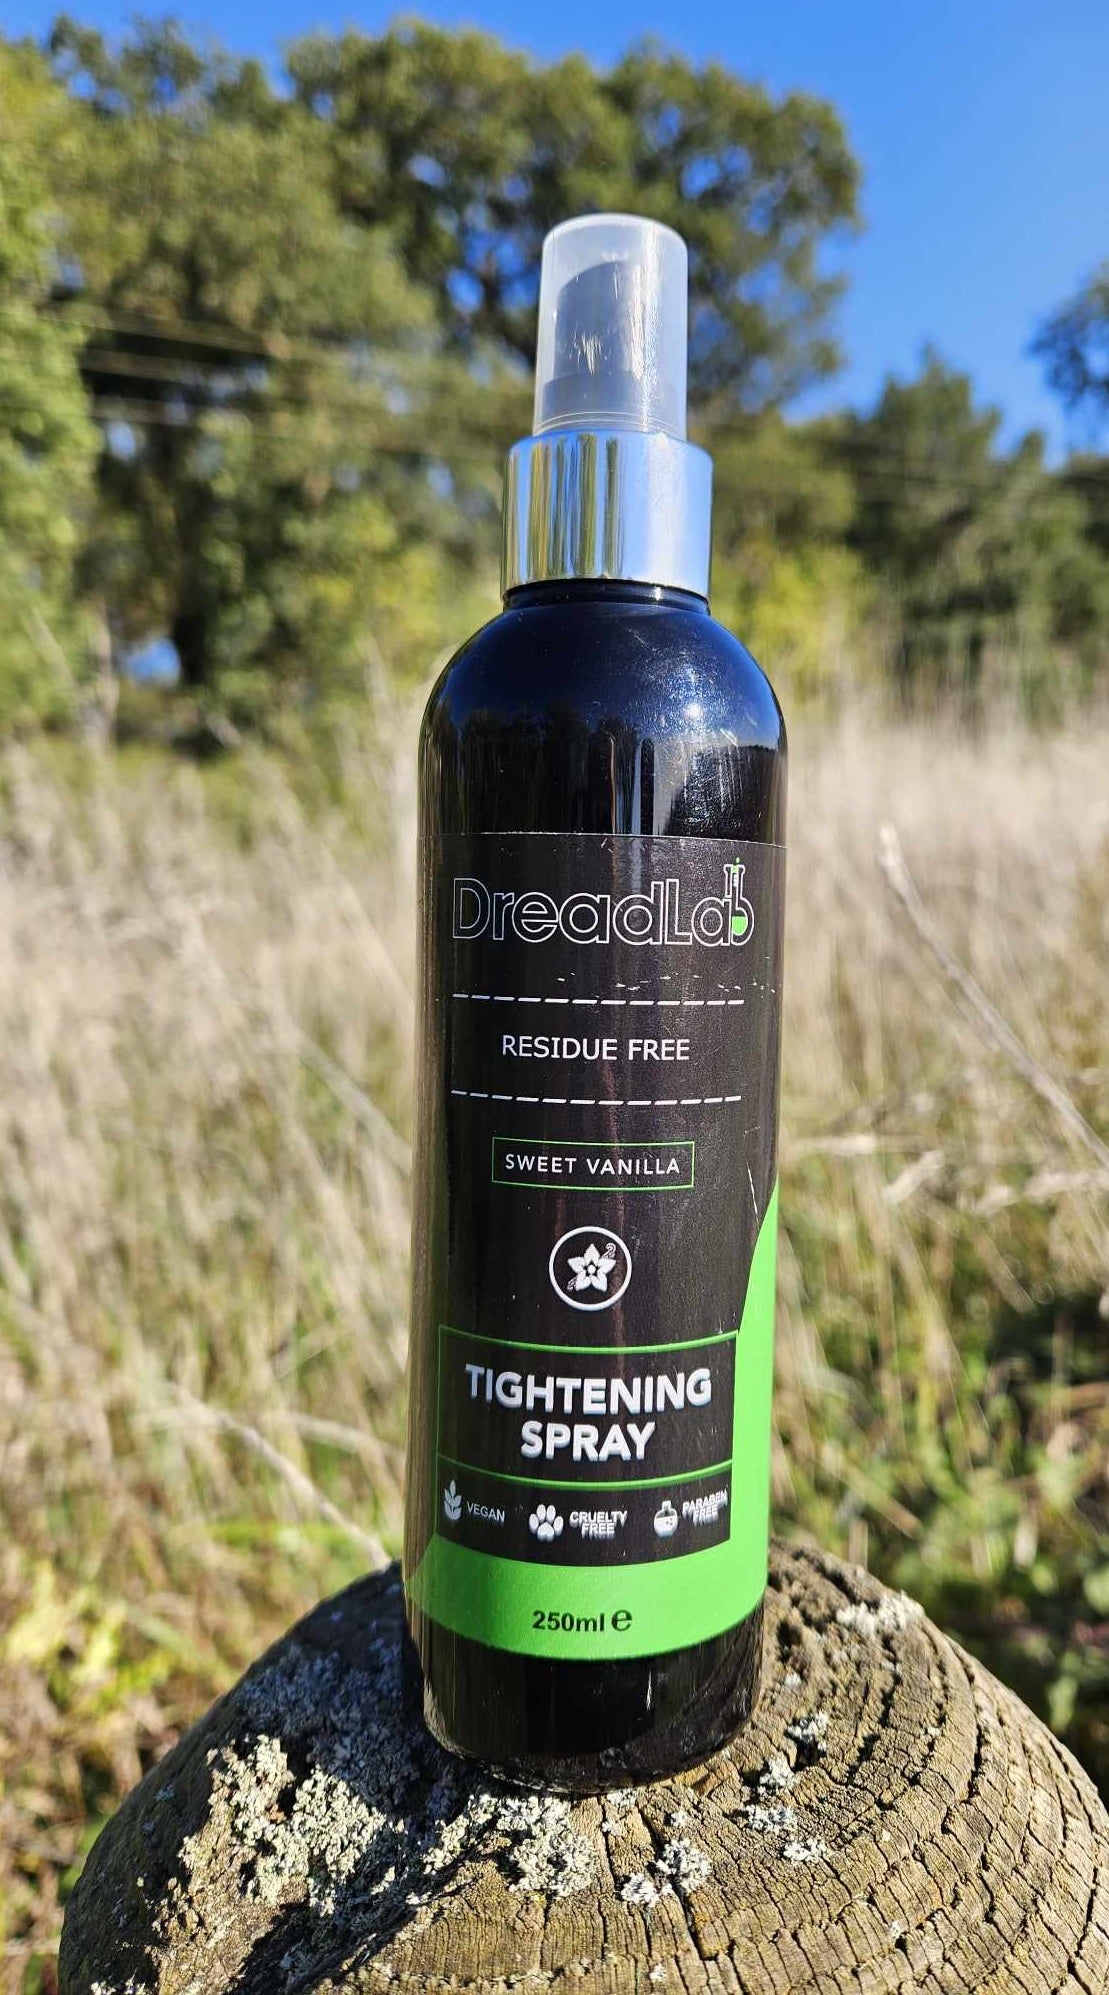 DreadLab - Dreadlocks Tightening Spray (250ml) Residue Free